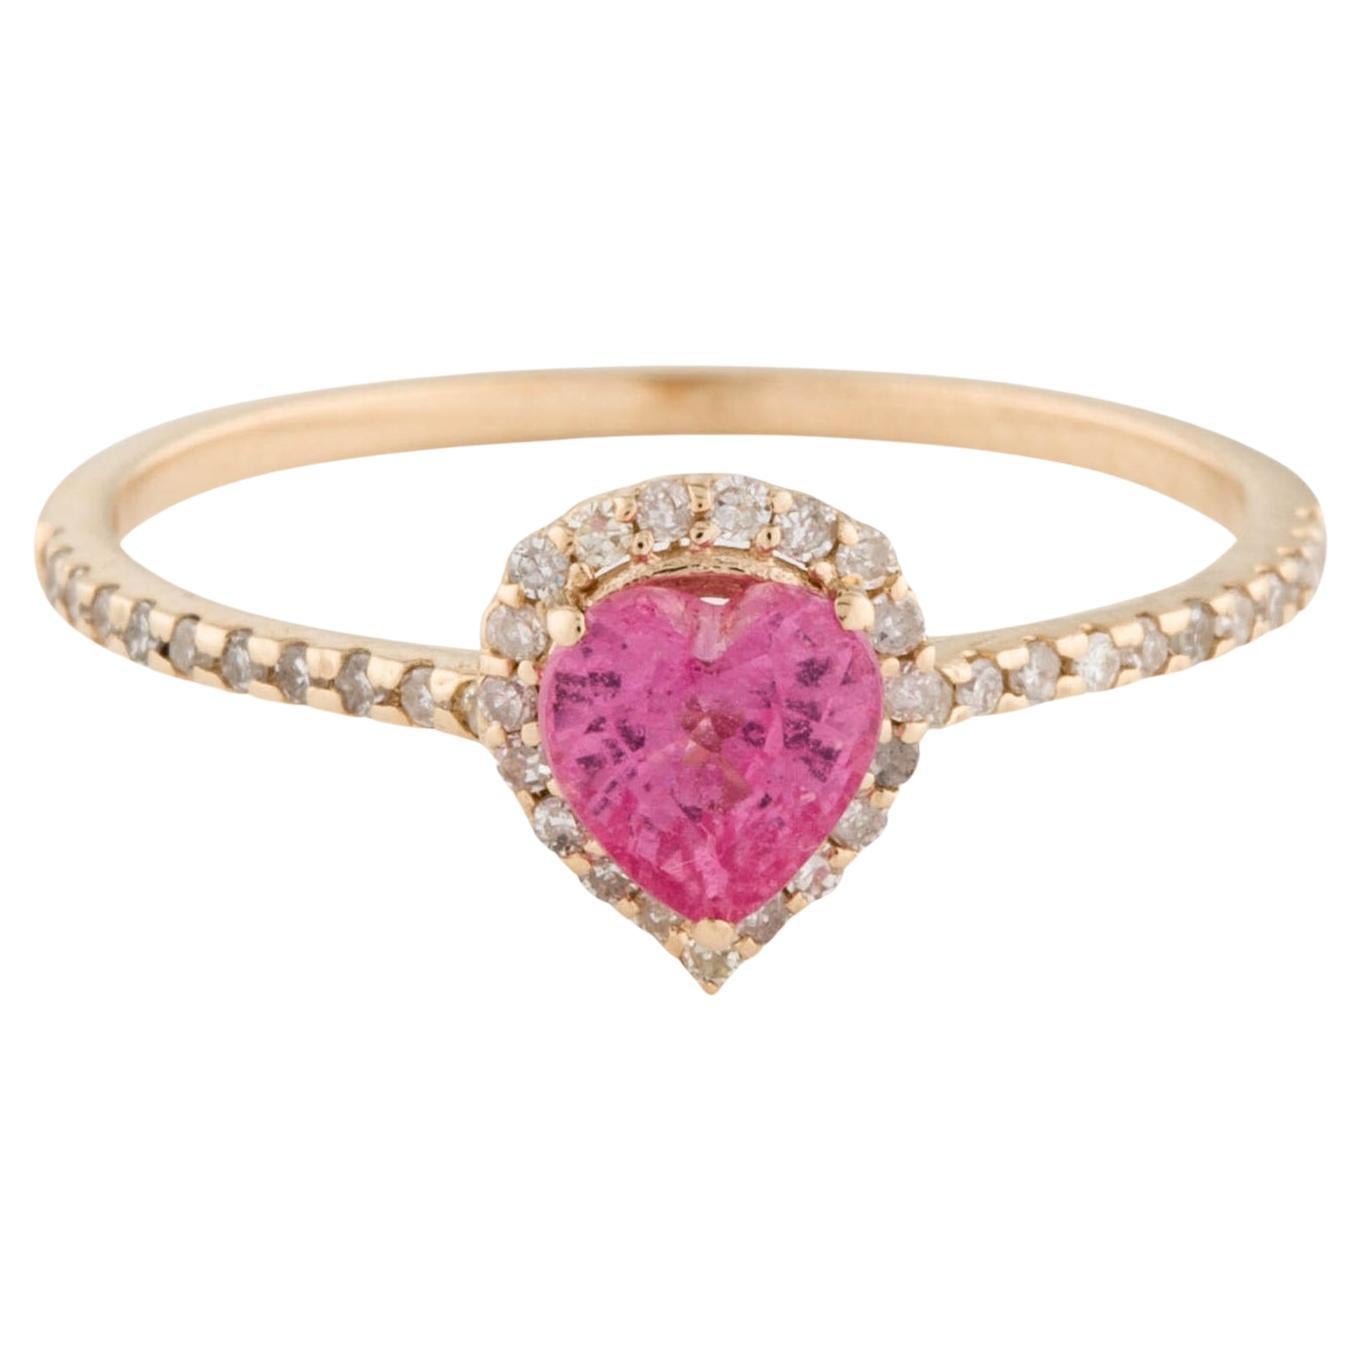 Gorgeous 14K Pink Sapphire & Diamond Cocktail Ring - Size 7  Elegant Jewelry